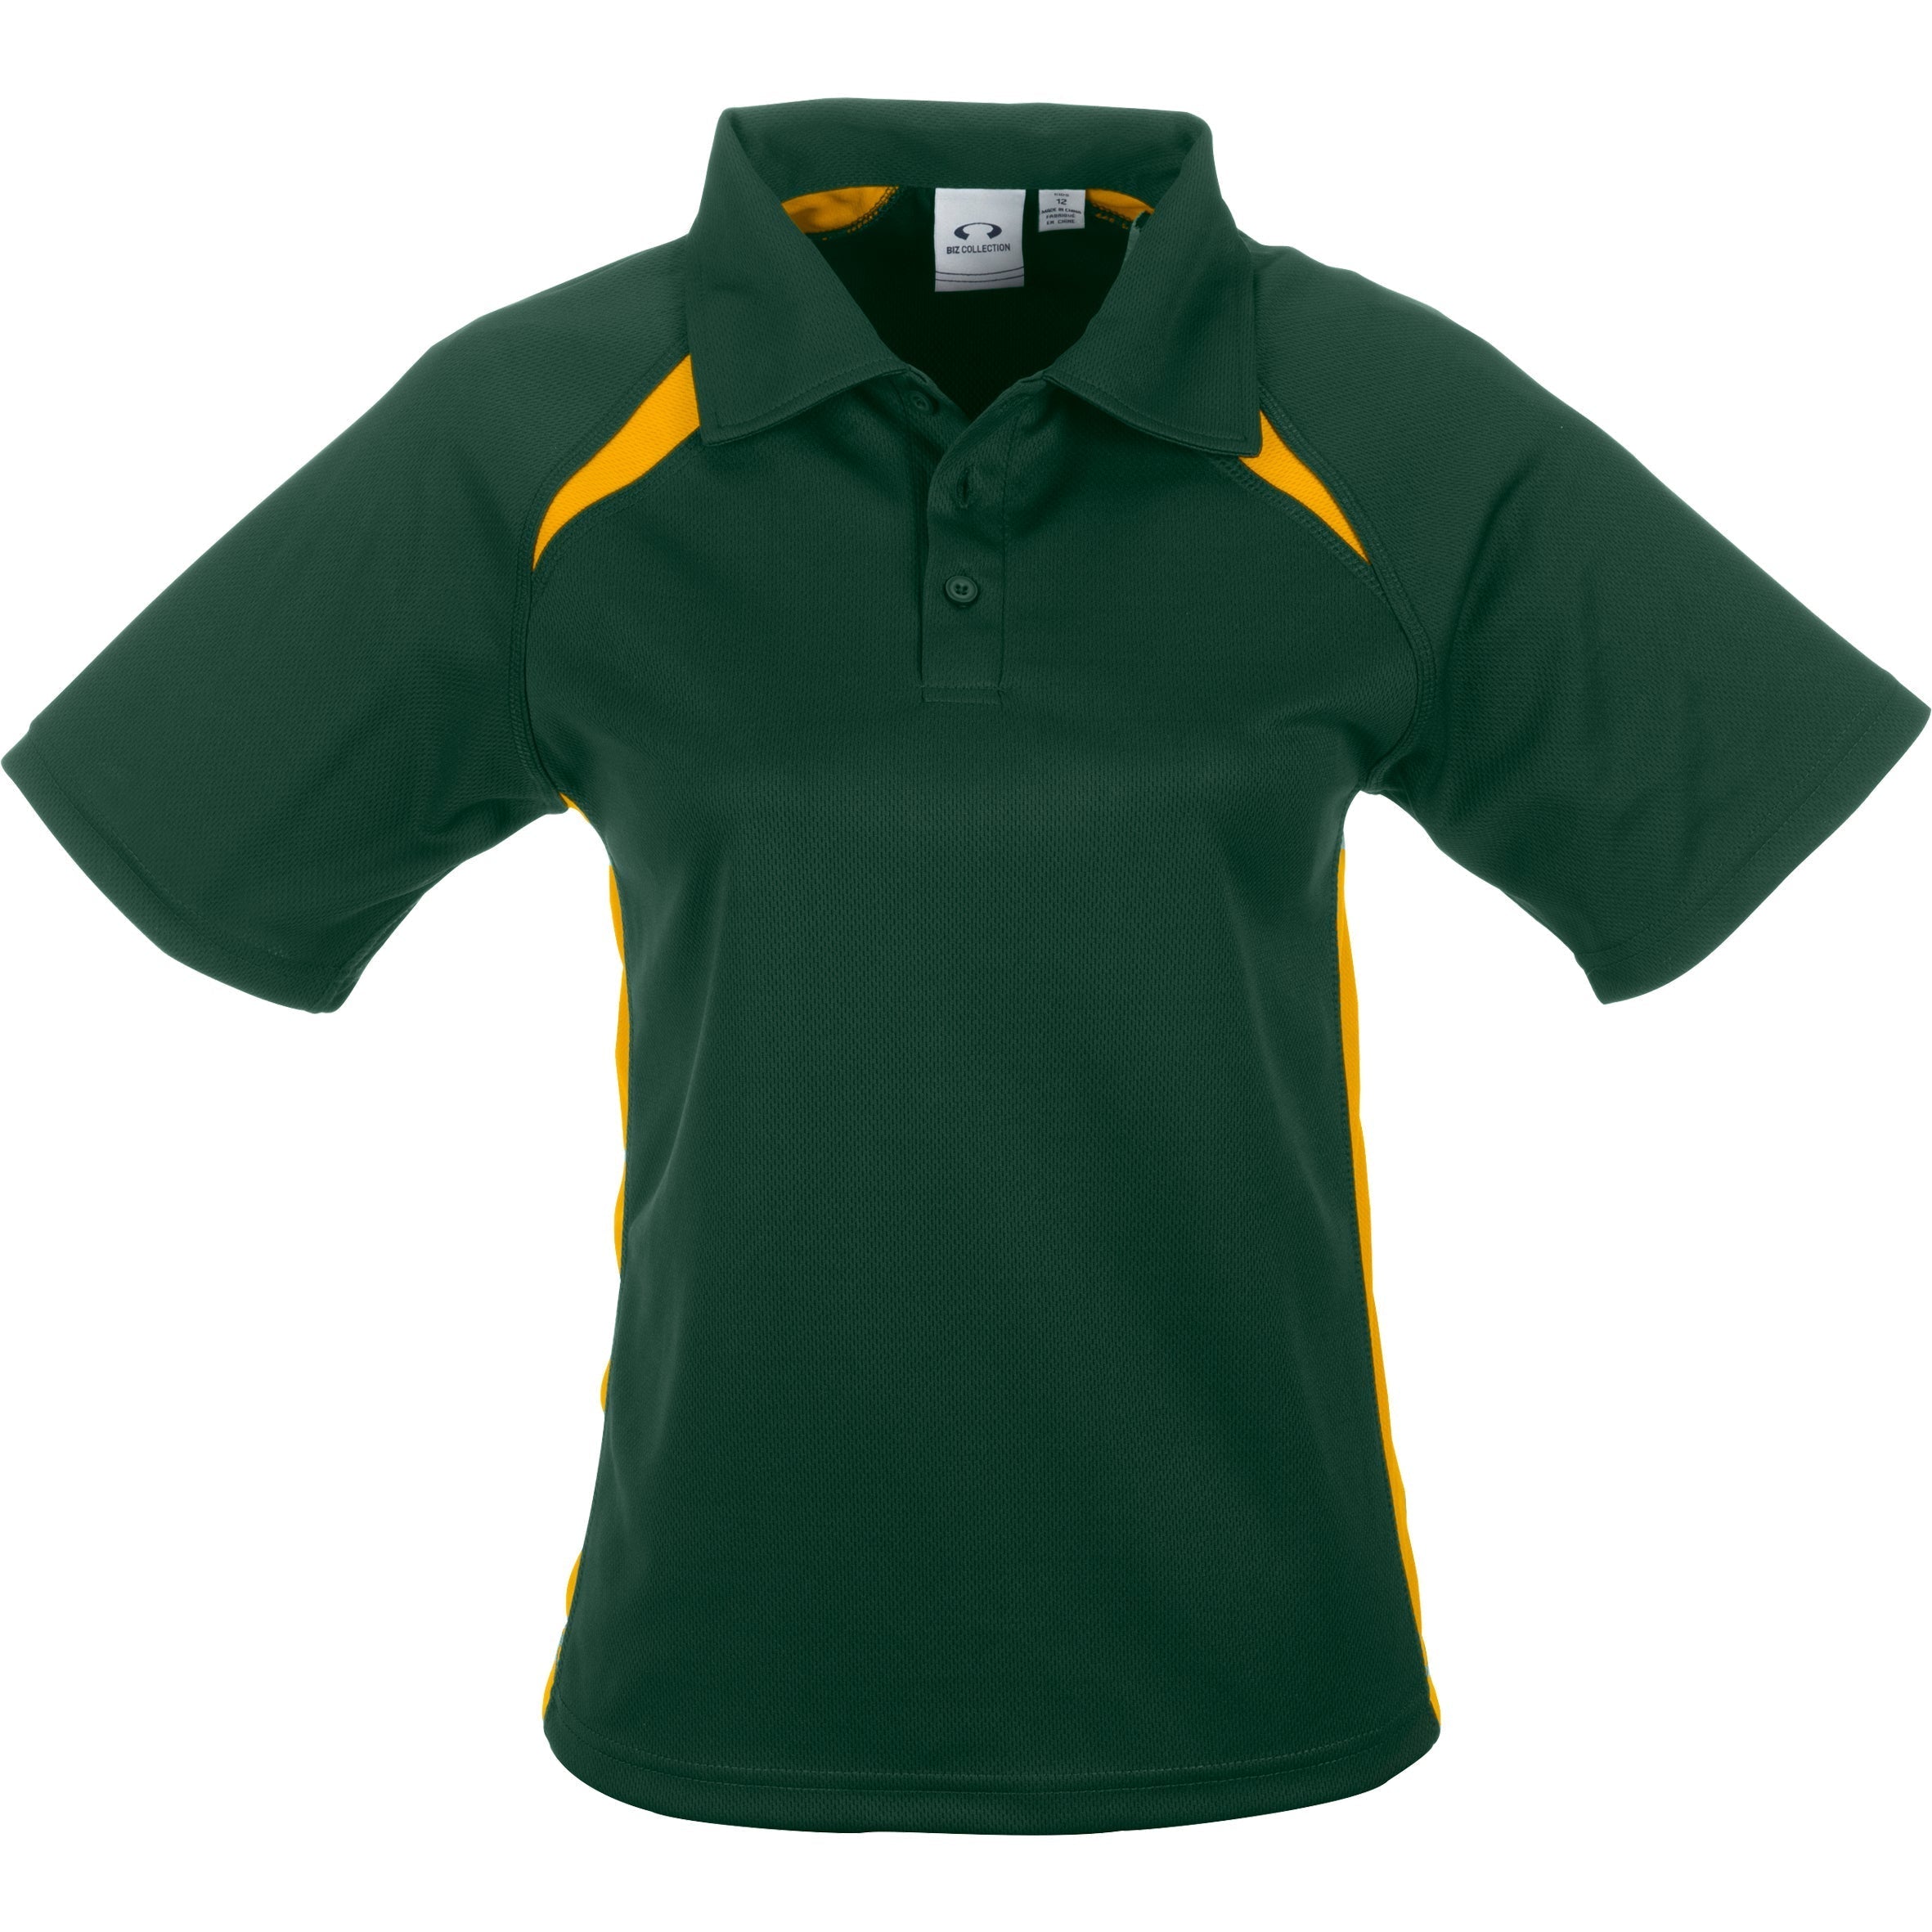 Kids Splice Golf Shirt-Shirts & Tops-8-Green and Gold-GG